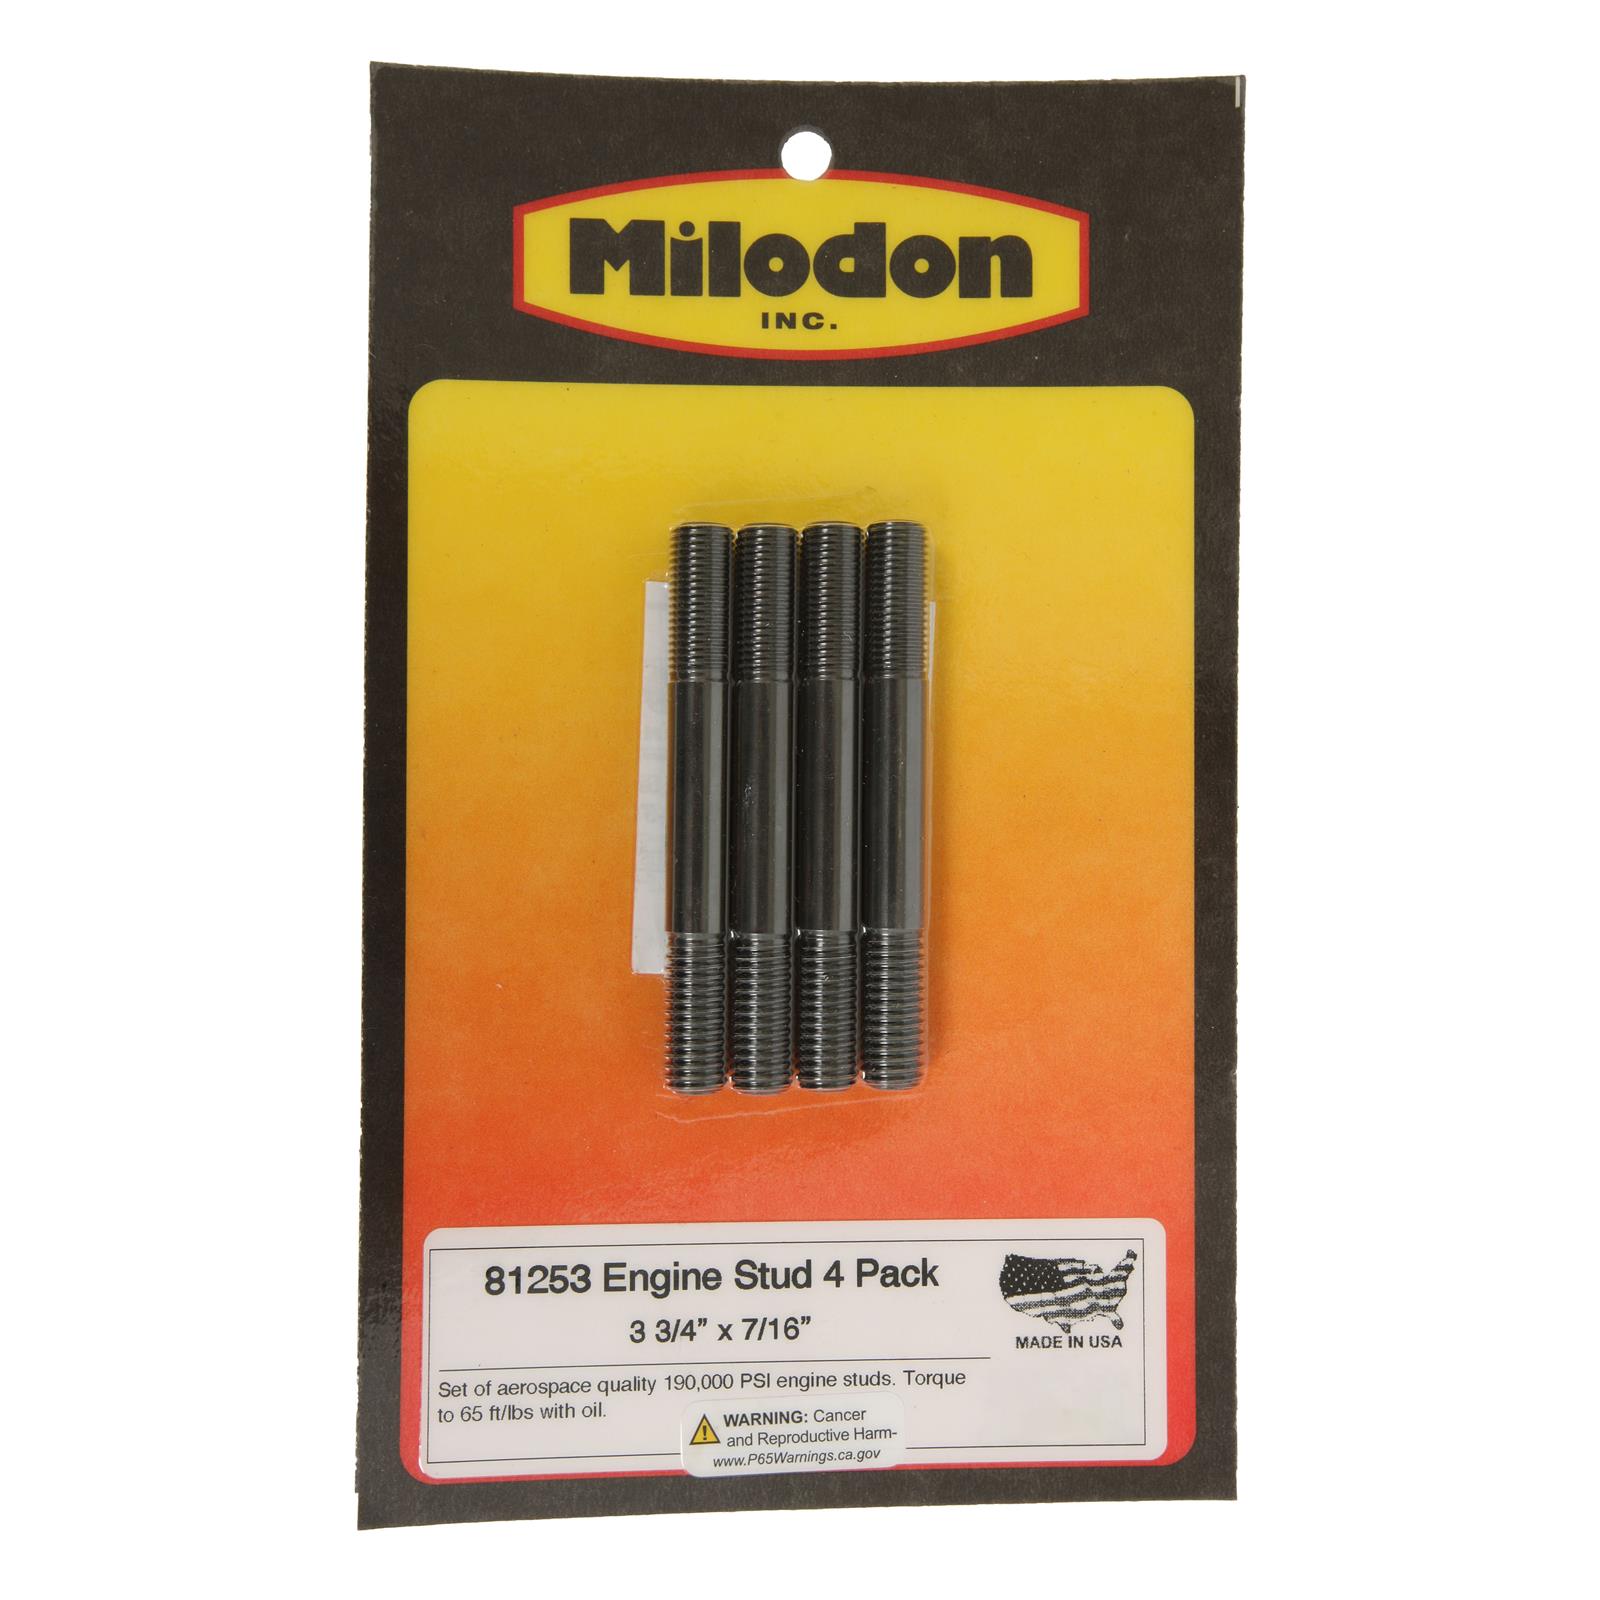 Milodon 4 5/8 x 1/2 Studs 4 Pack 81277